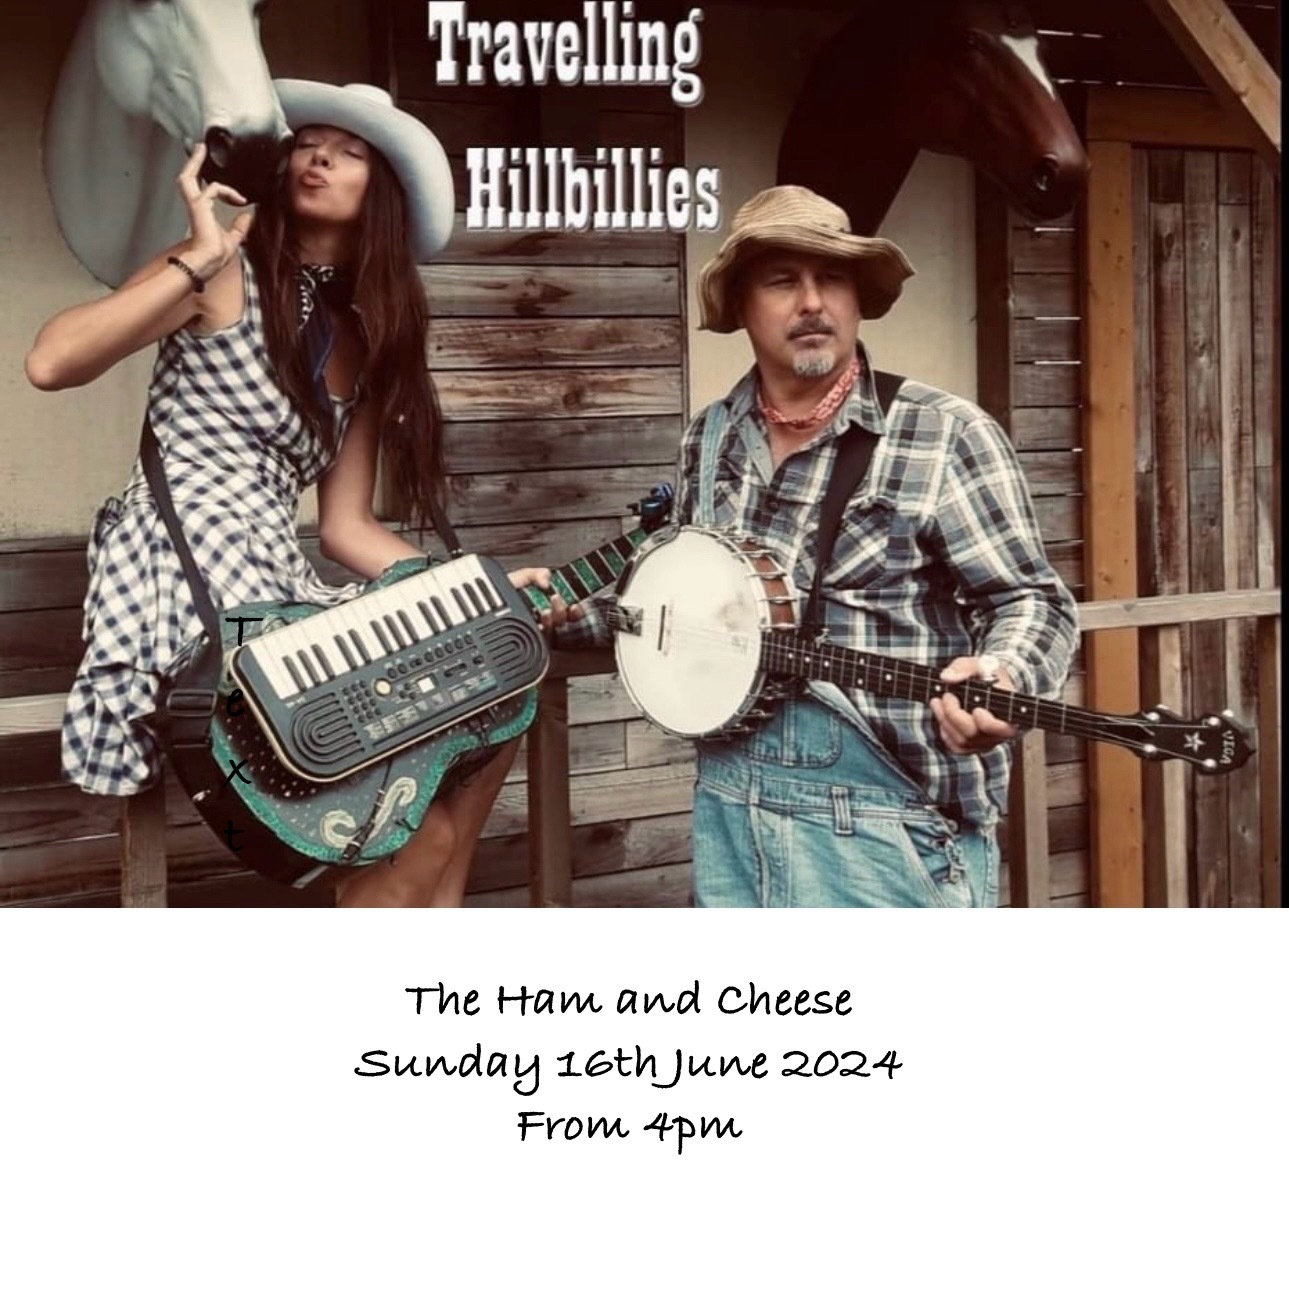 Sunday 16th June 2024 - The Travelling Hillbillies